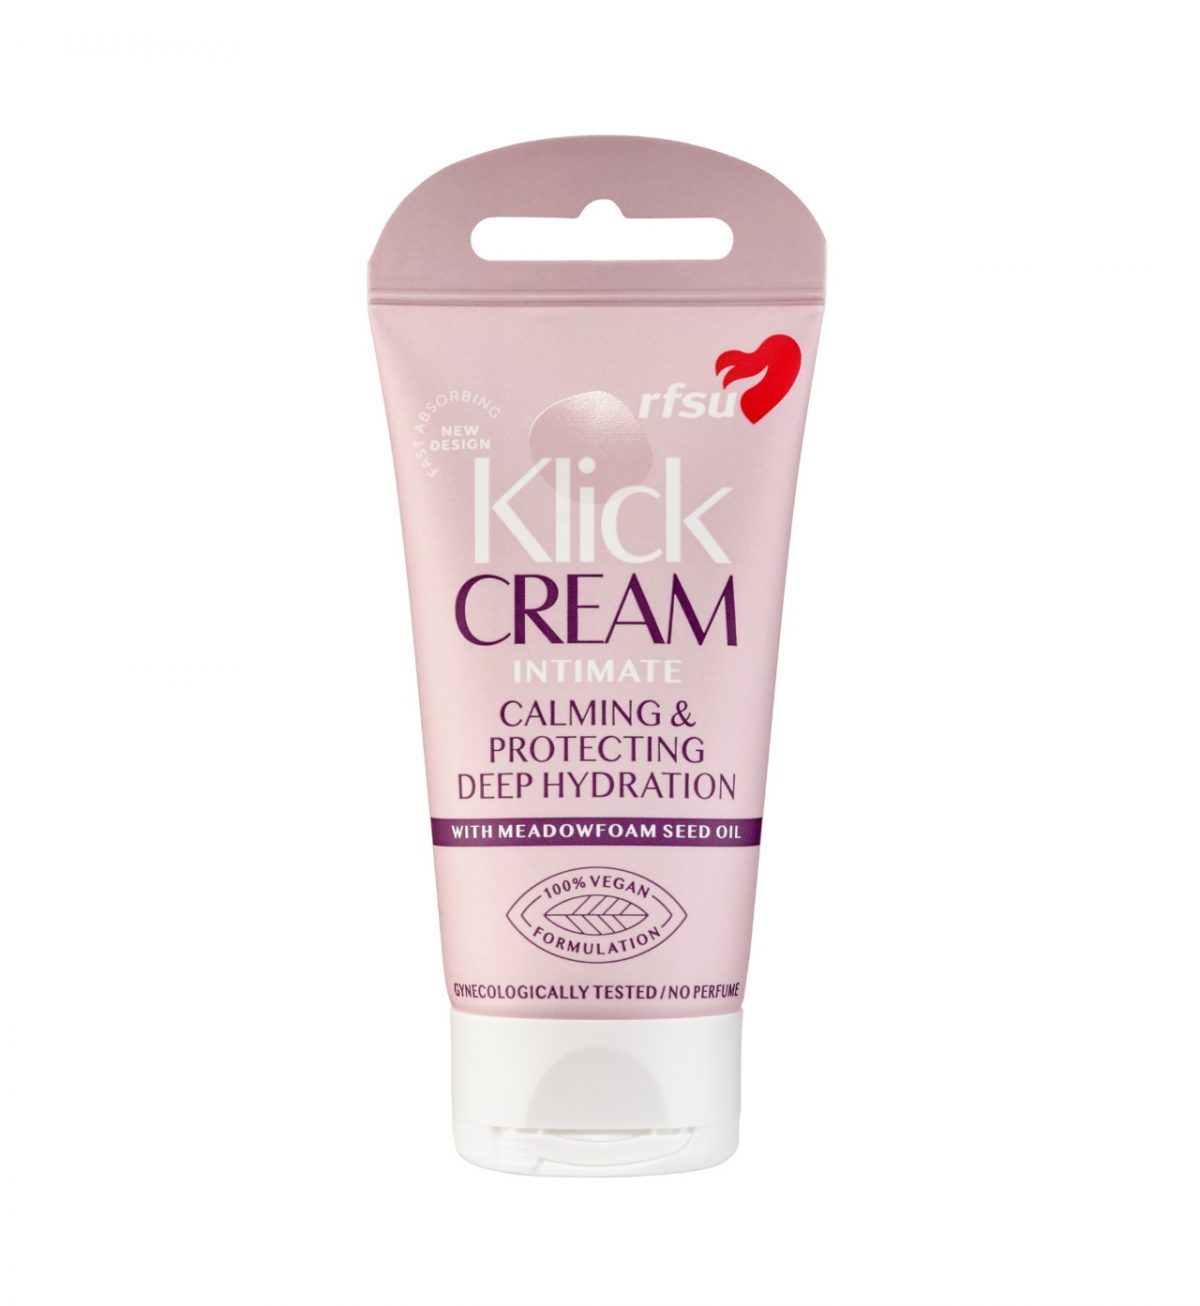 rfsu klick intimate cream